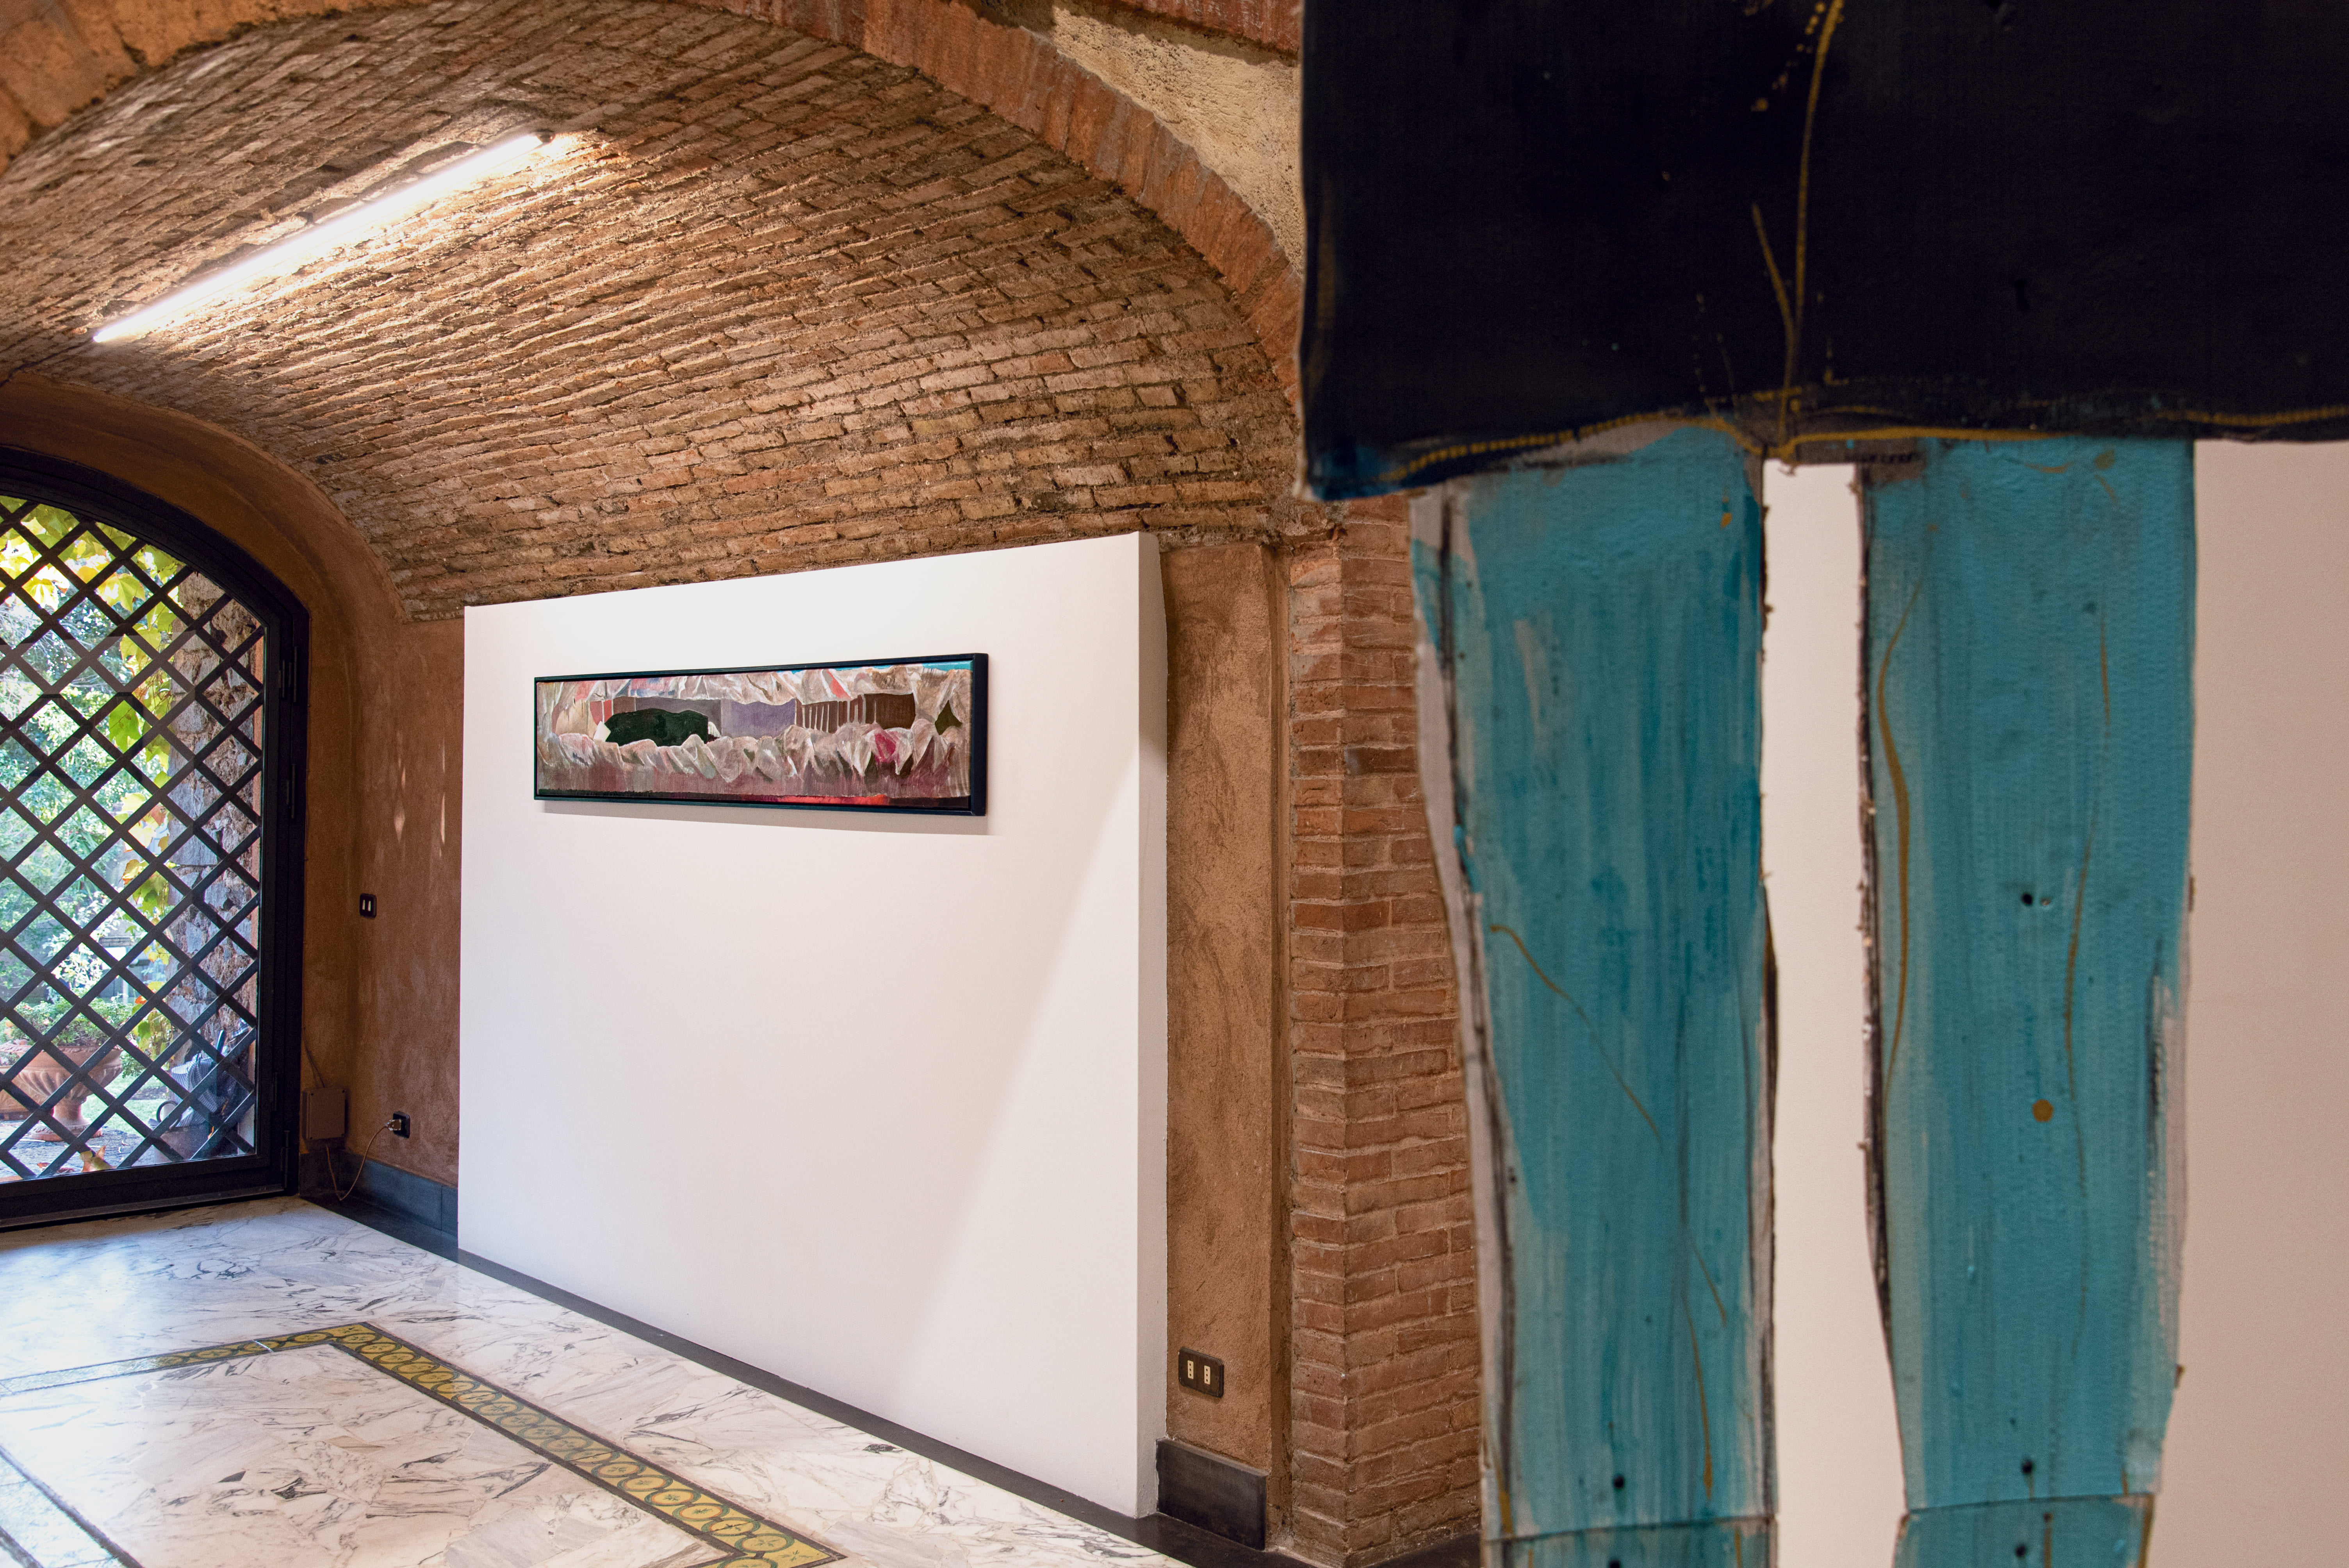 Francesco Lauretta, Viral impurity - Fake inner, installation view, Collica & Partners, San Gregorio (Catania)